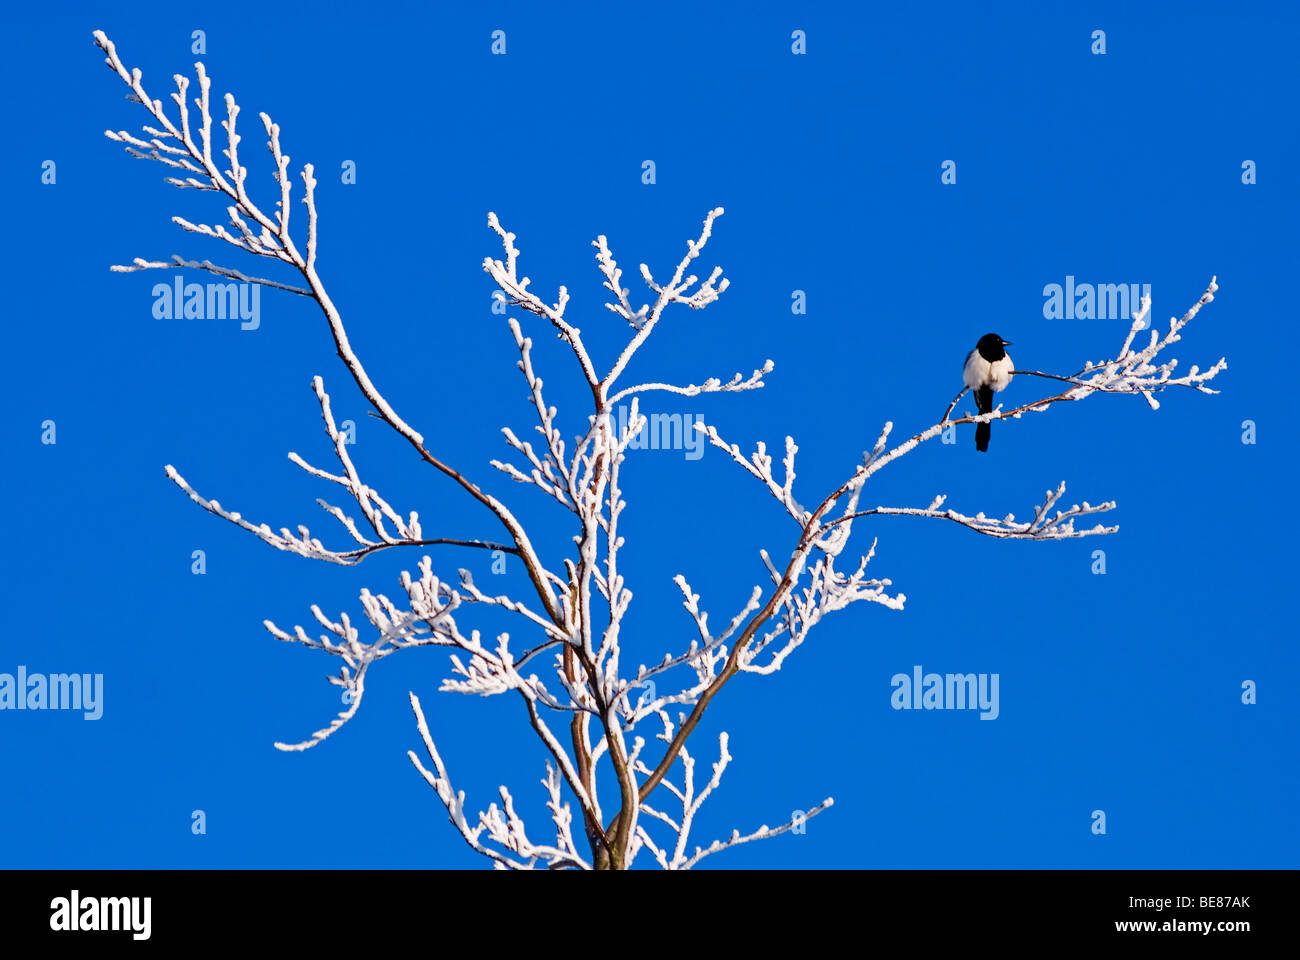 Ekster op berijpte tak tegen blauwe lucht; Comune Gazza sul ramo smerigliato con cielo blu Foto Stock